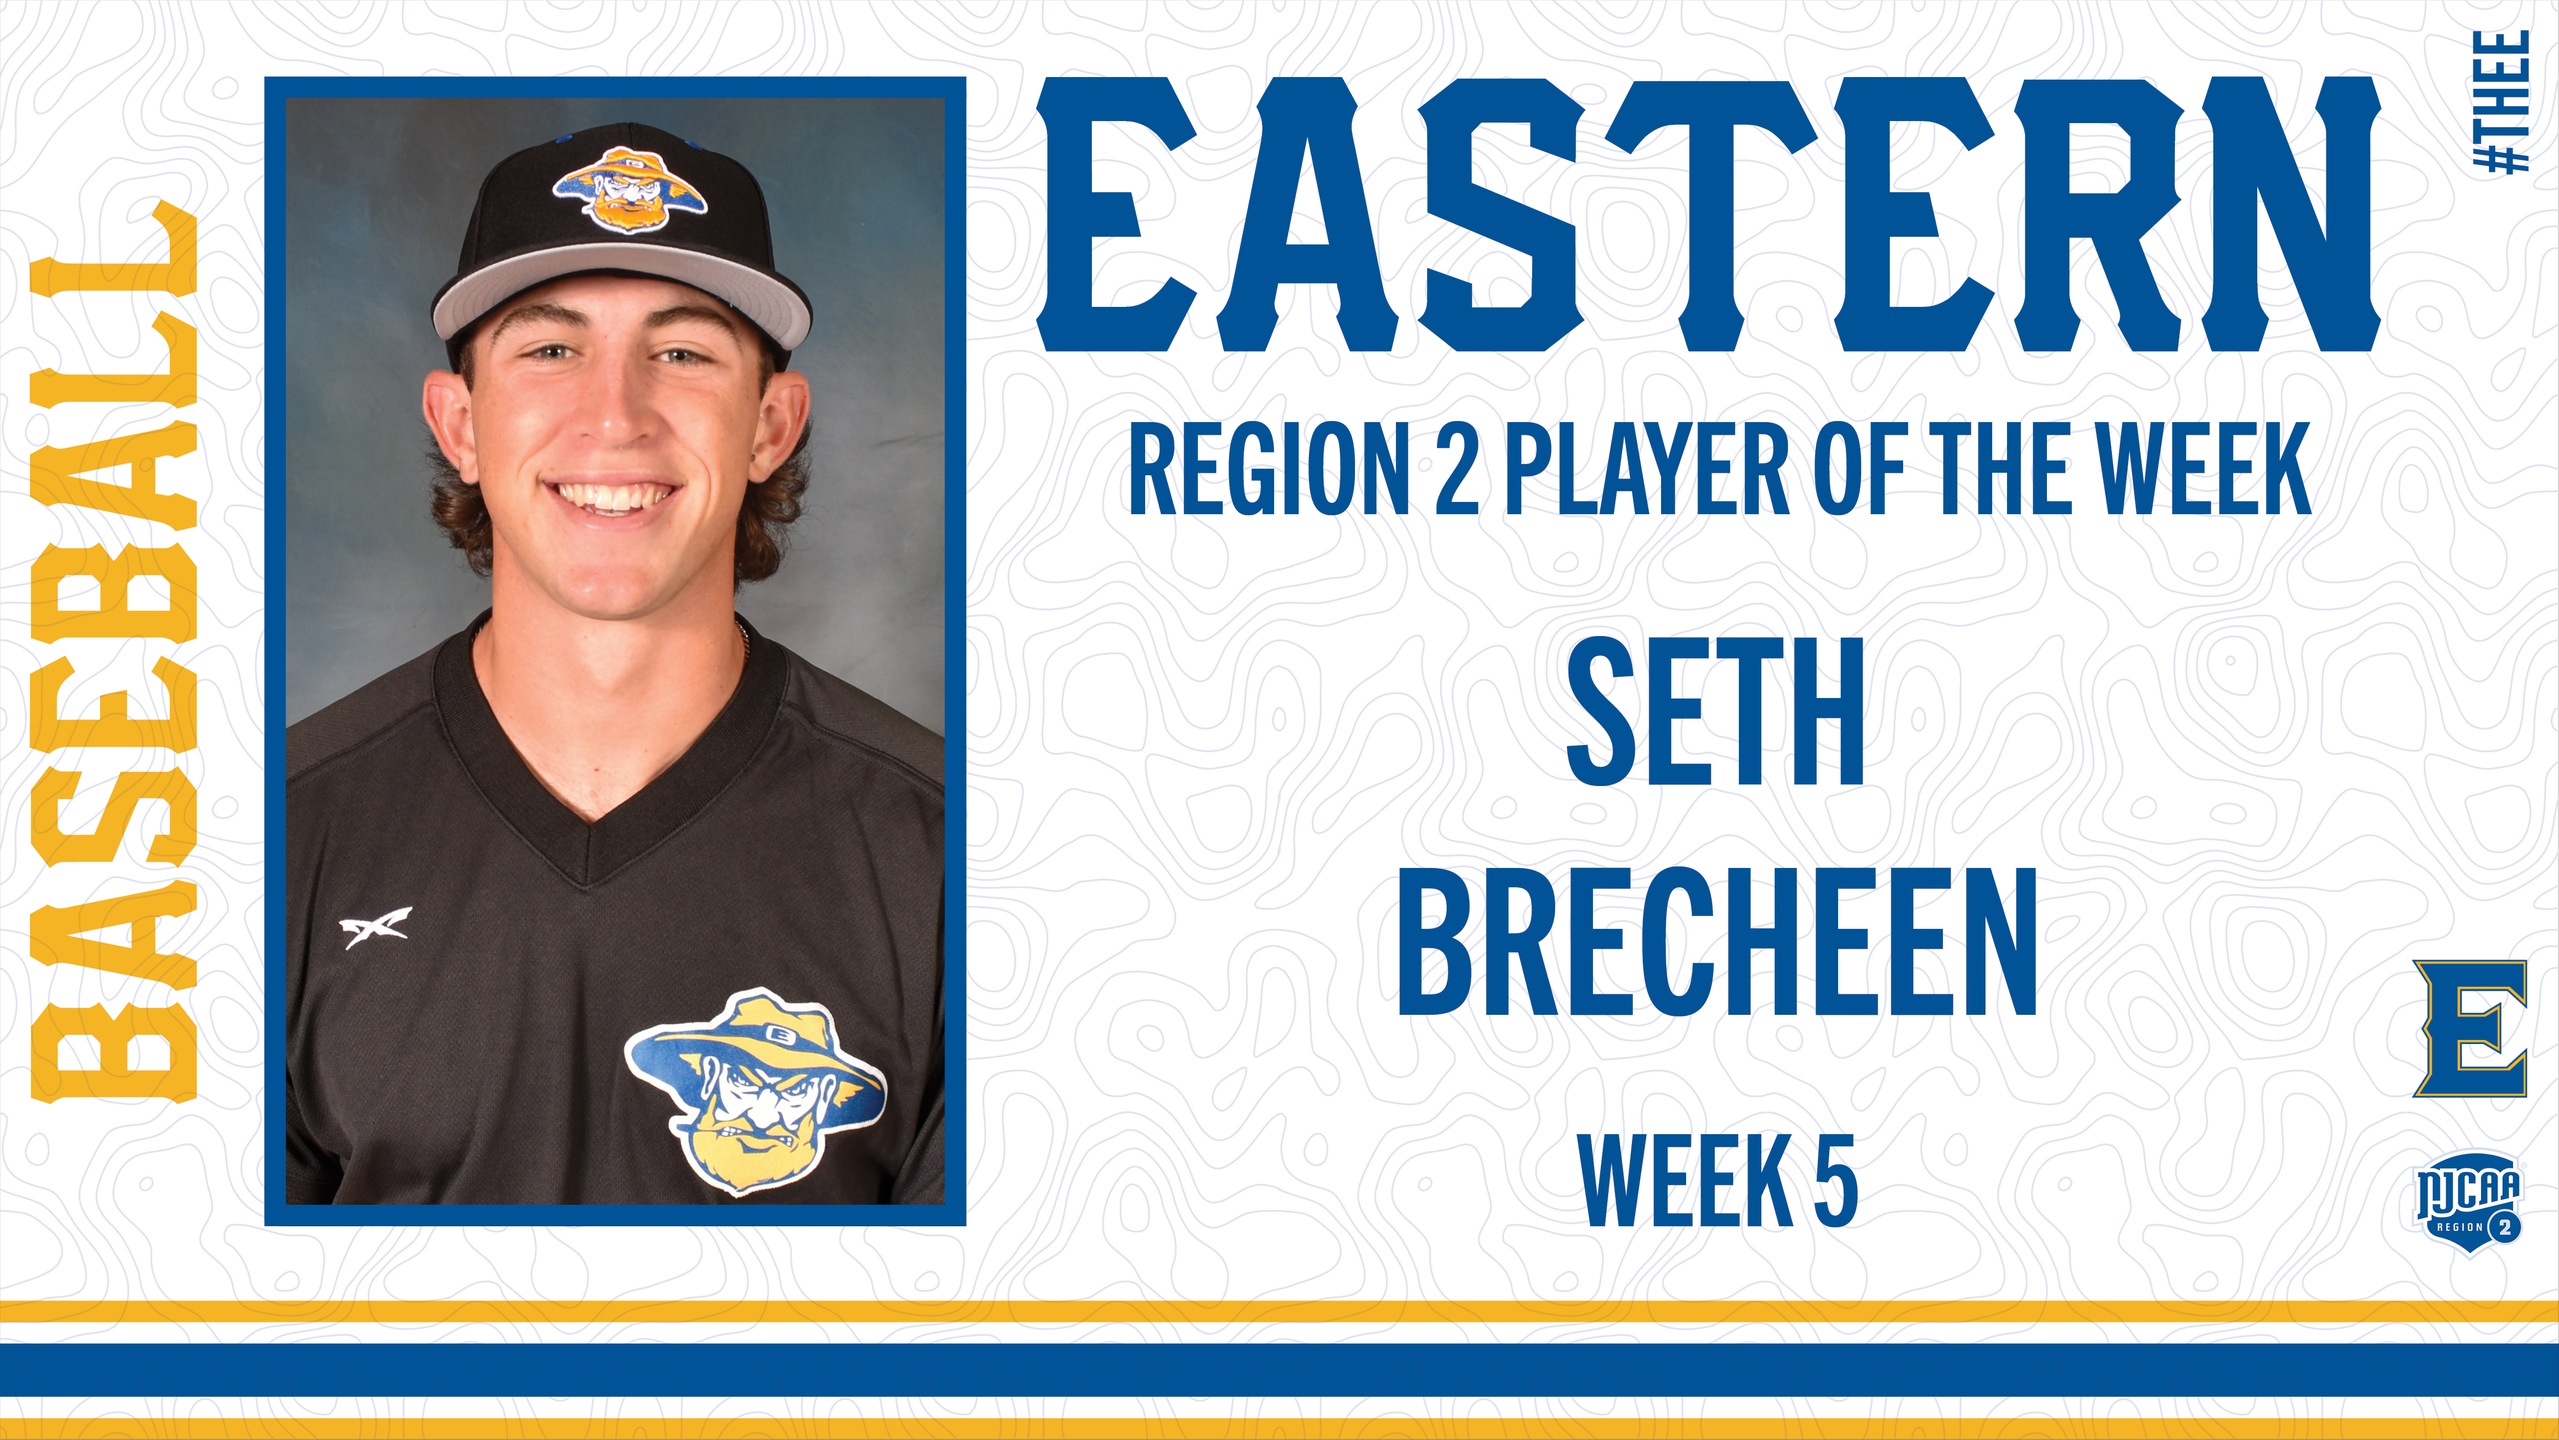 Seth Brecheen earns NJCAA Region 2 Player of the Week honors